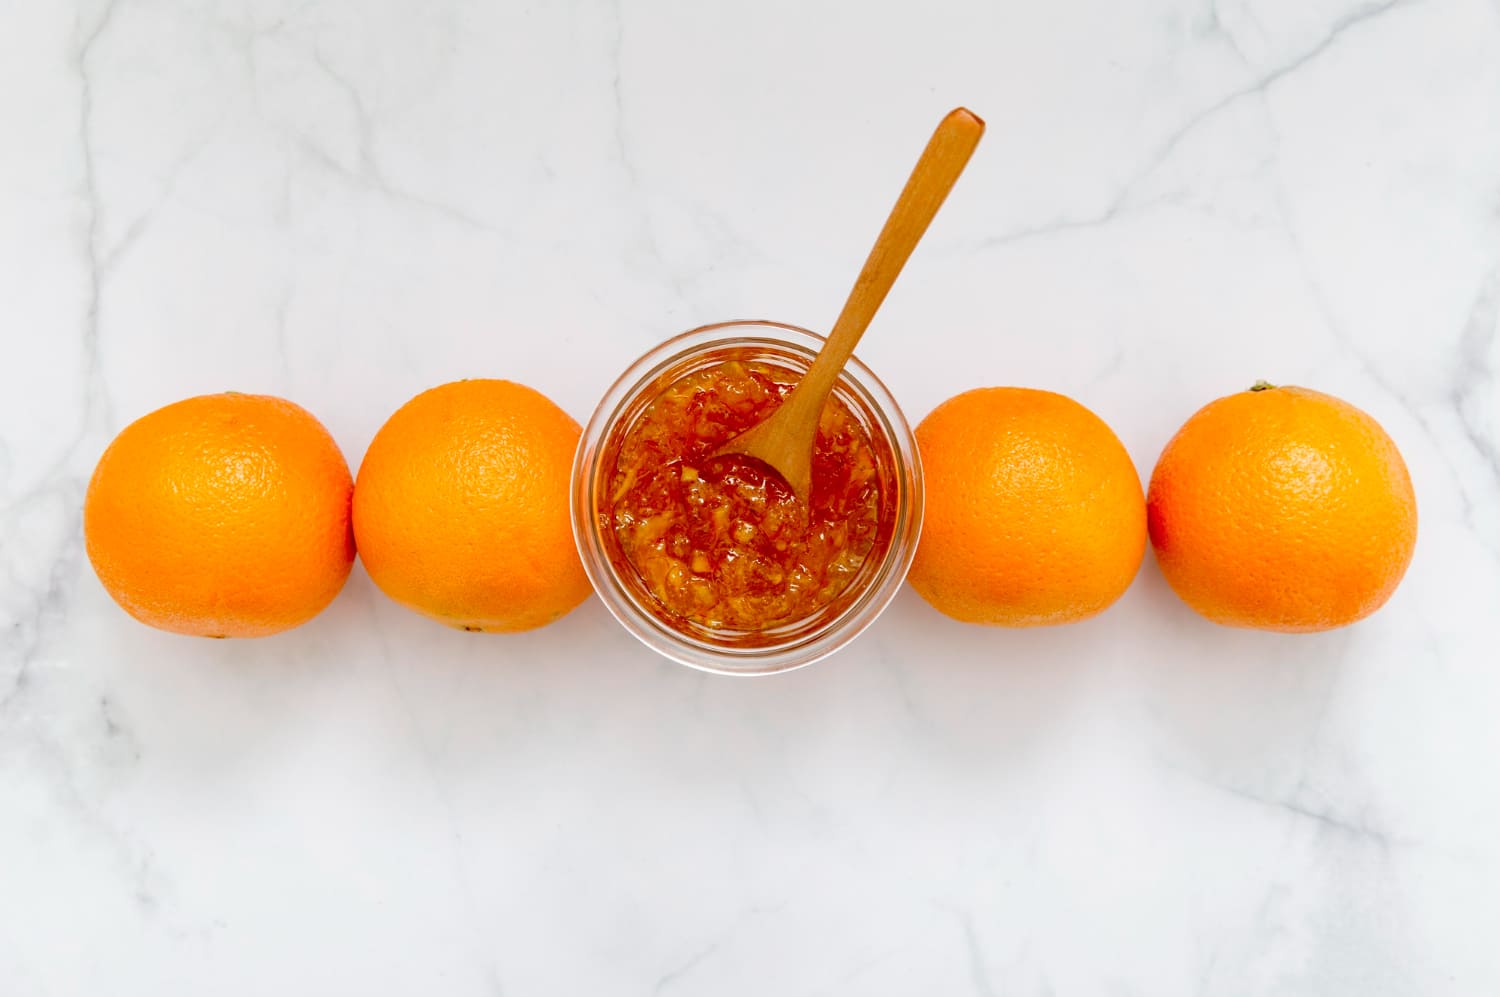 Mandarinas para todo el año: prepara mermelada casera